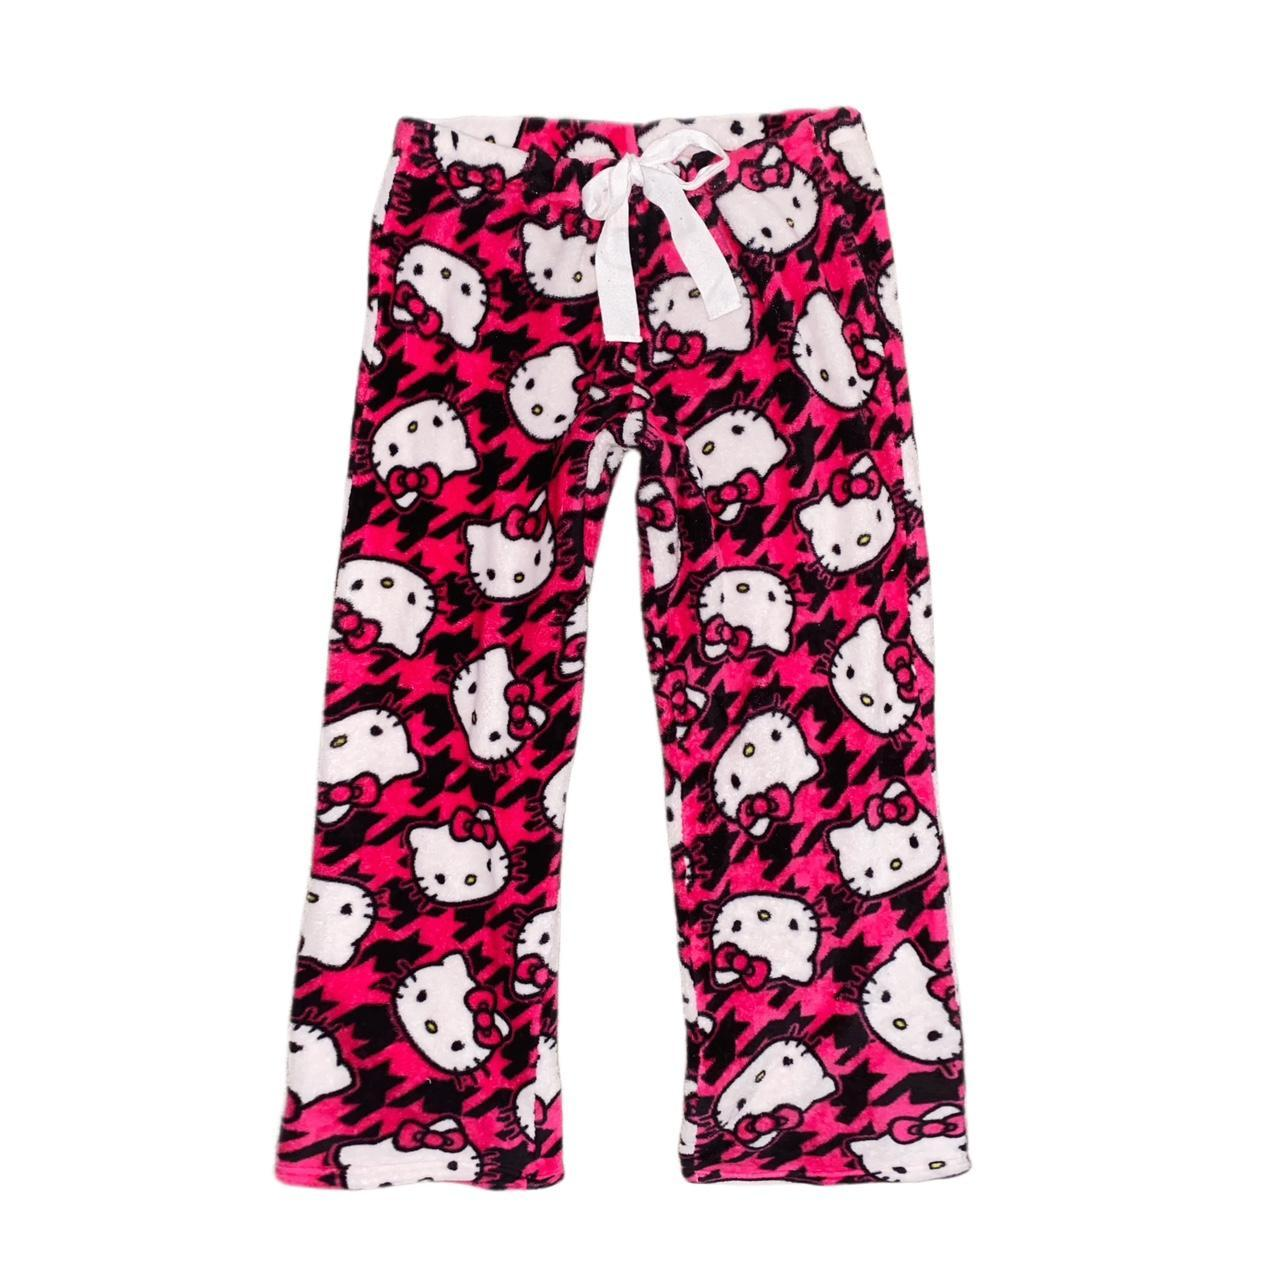 Women's Pink and Black pajama pants